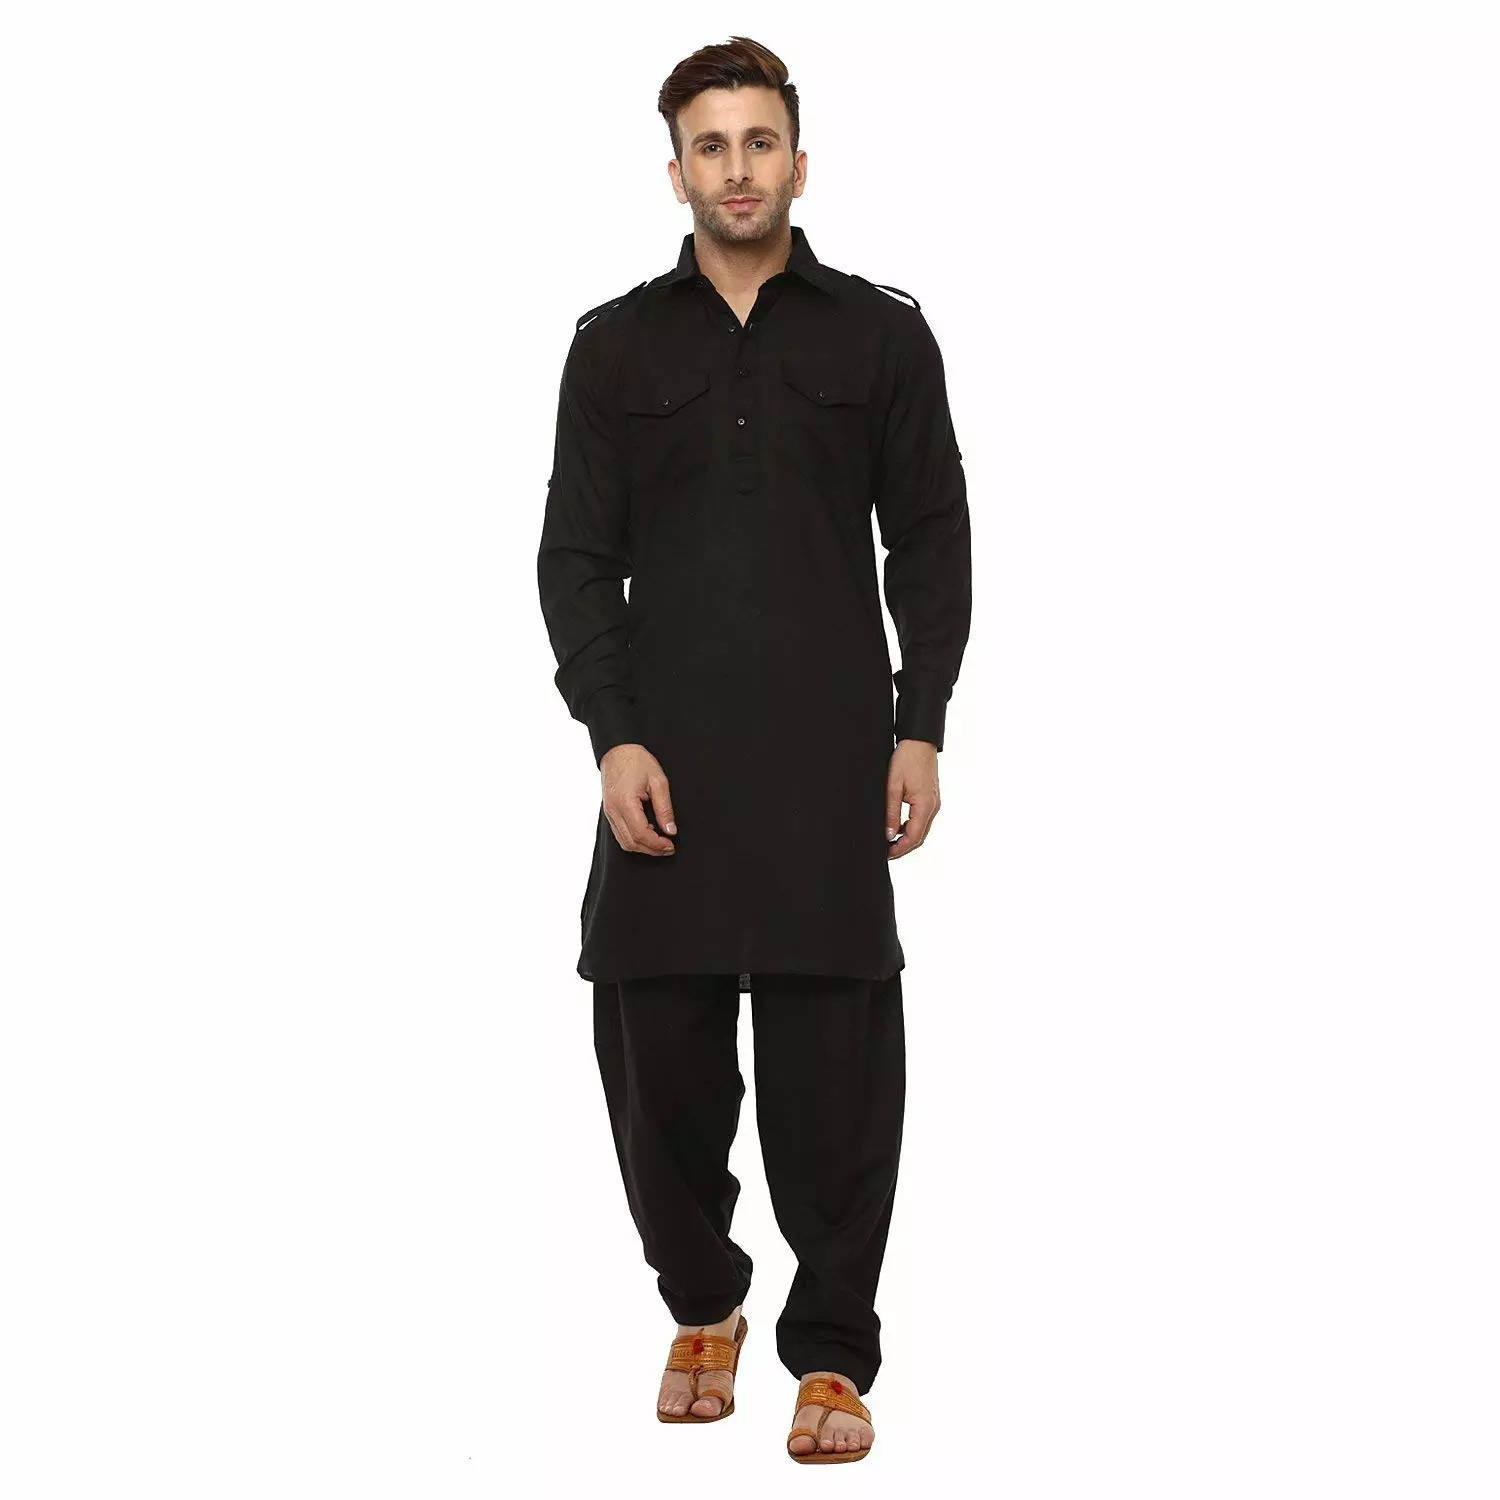 Buy K-ROYALS Stylish Designer Pathani suit for men/Special festival Kurta  pyjama set (Small/36, Black-Red) at Amazon.in